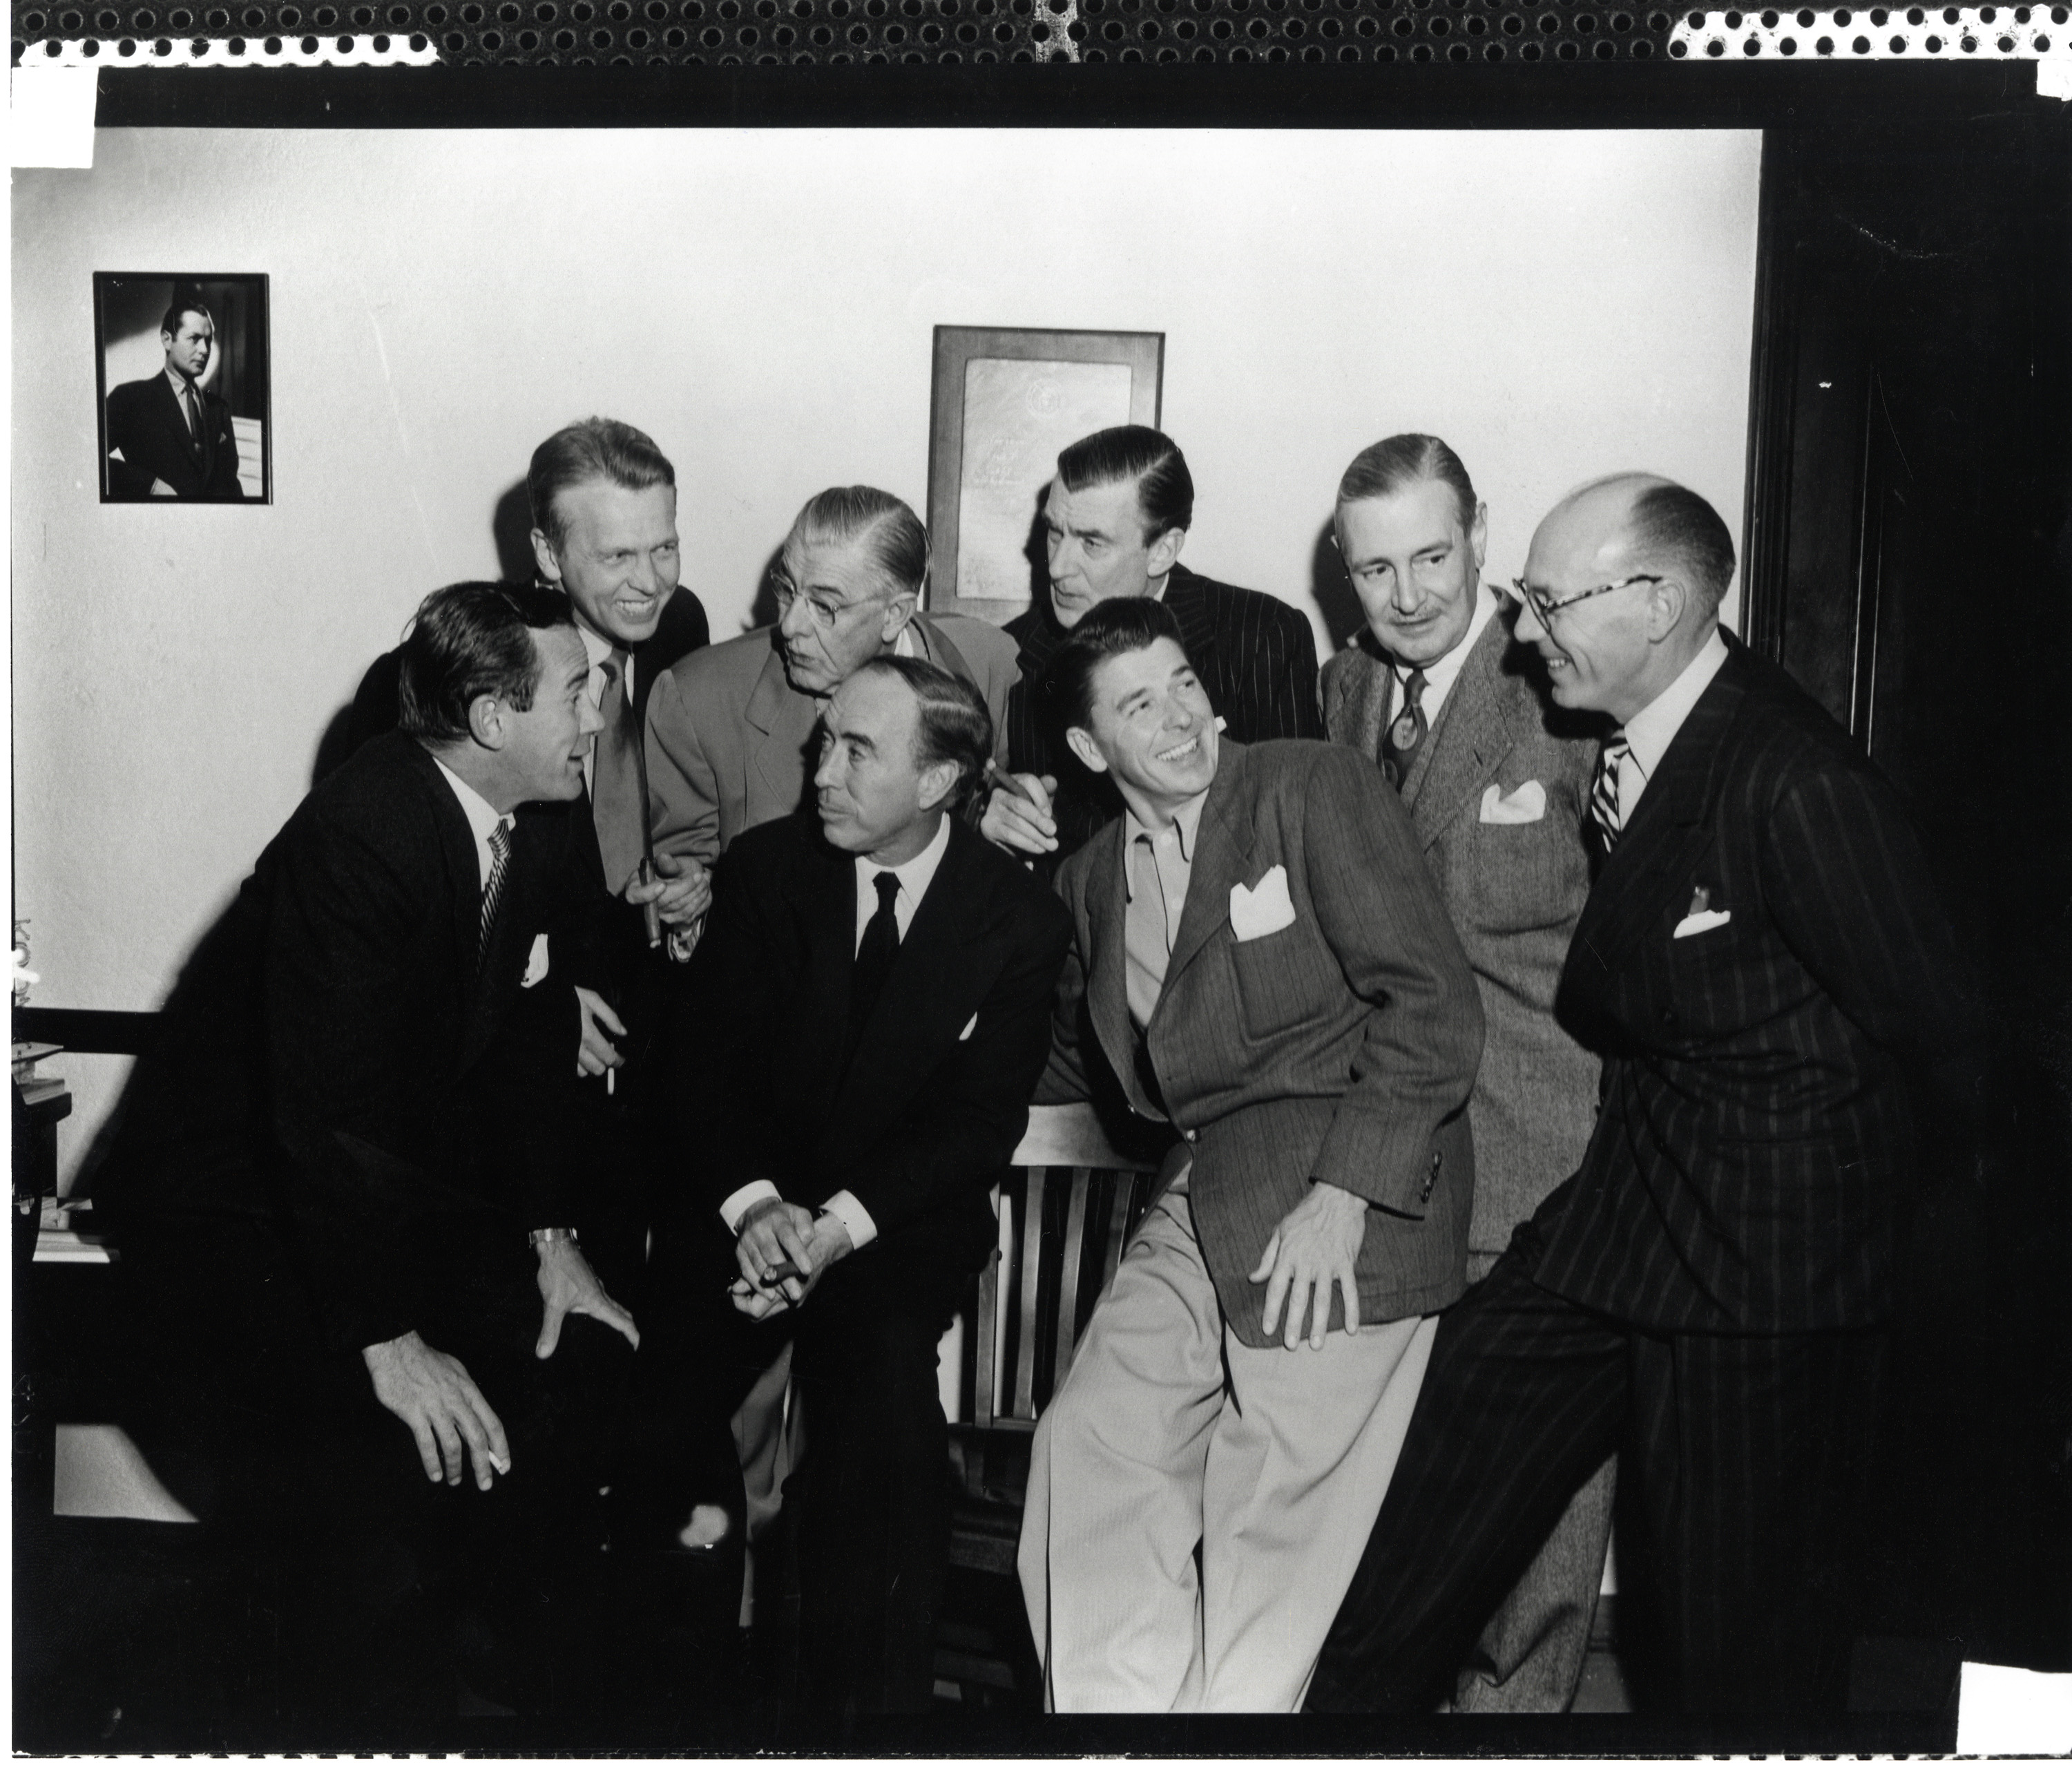 Ronald Reagan, Walter Pigeon, others at a Screen Actors Guild meeting (SAG) 1952